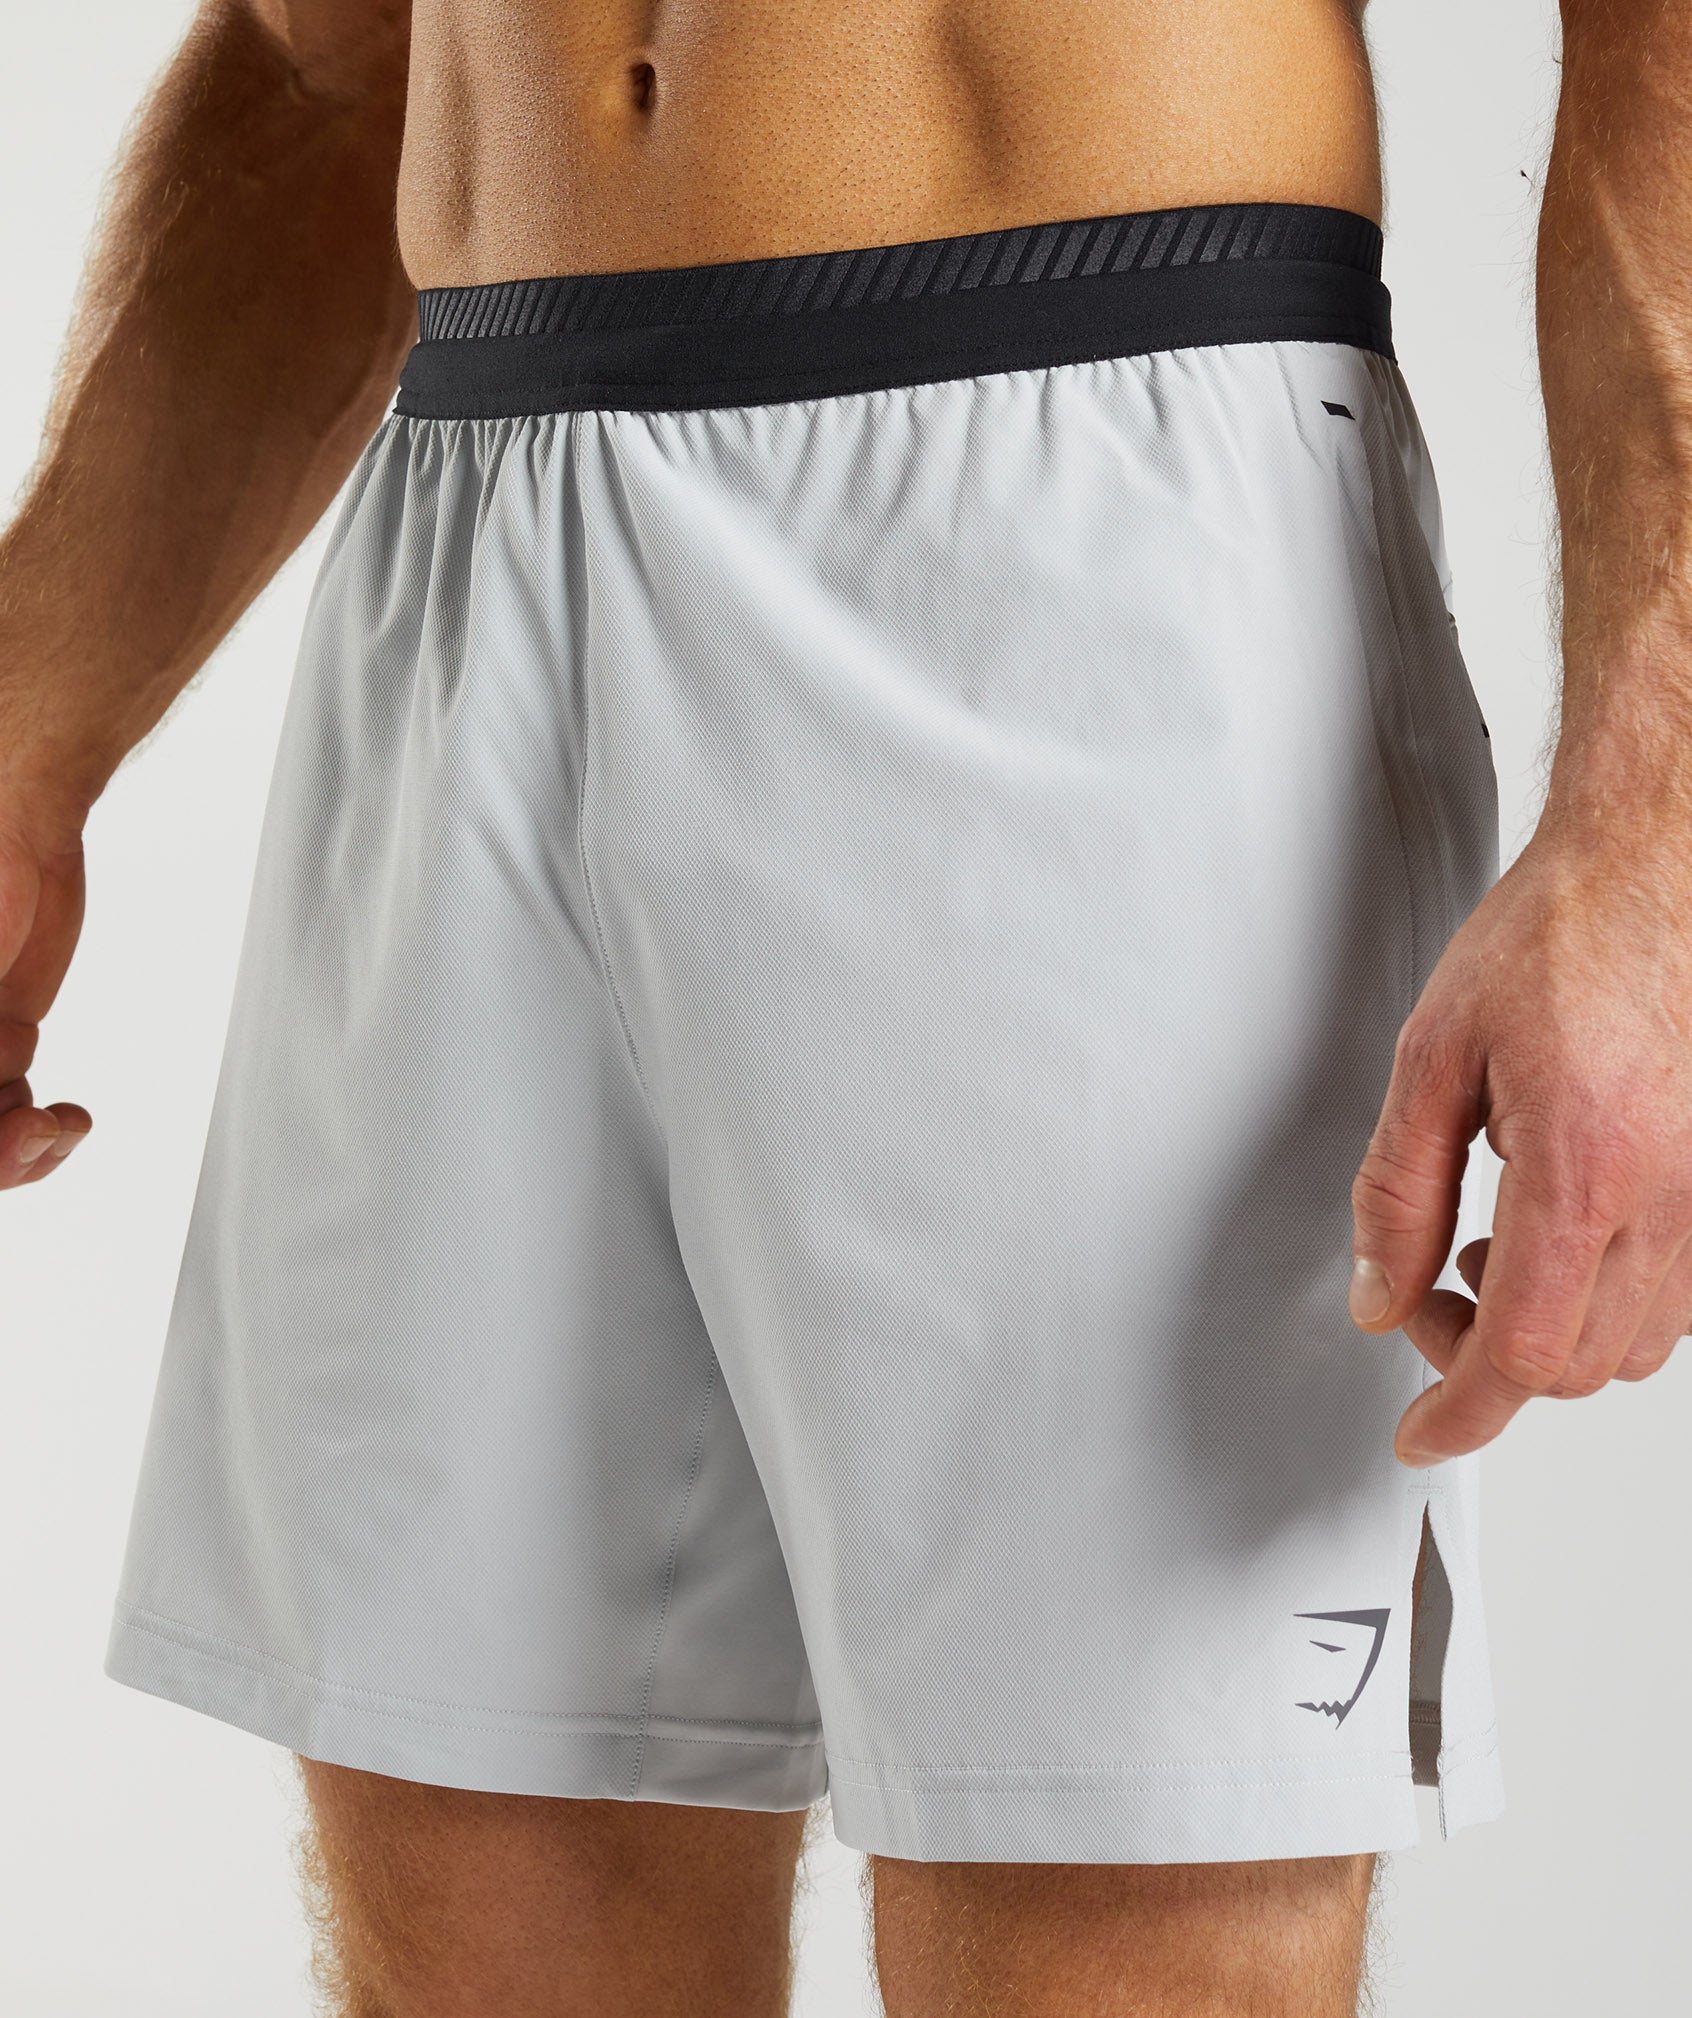 Apex 7" Hybrid Shorts in Light Grey - view 6